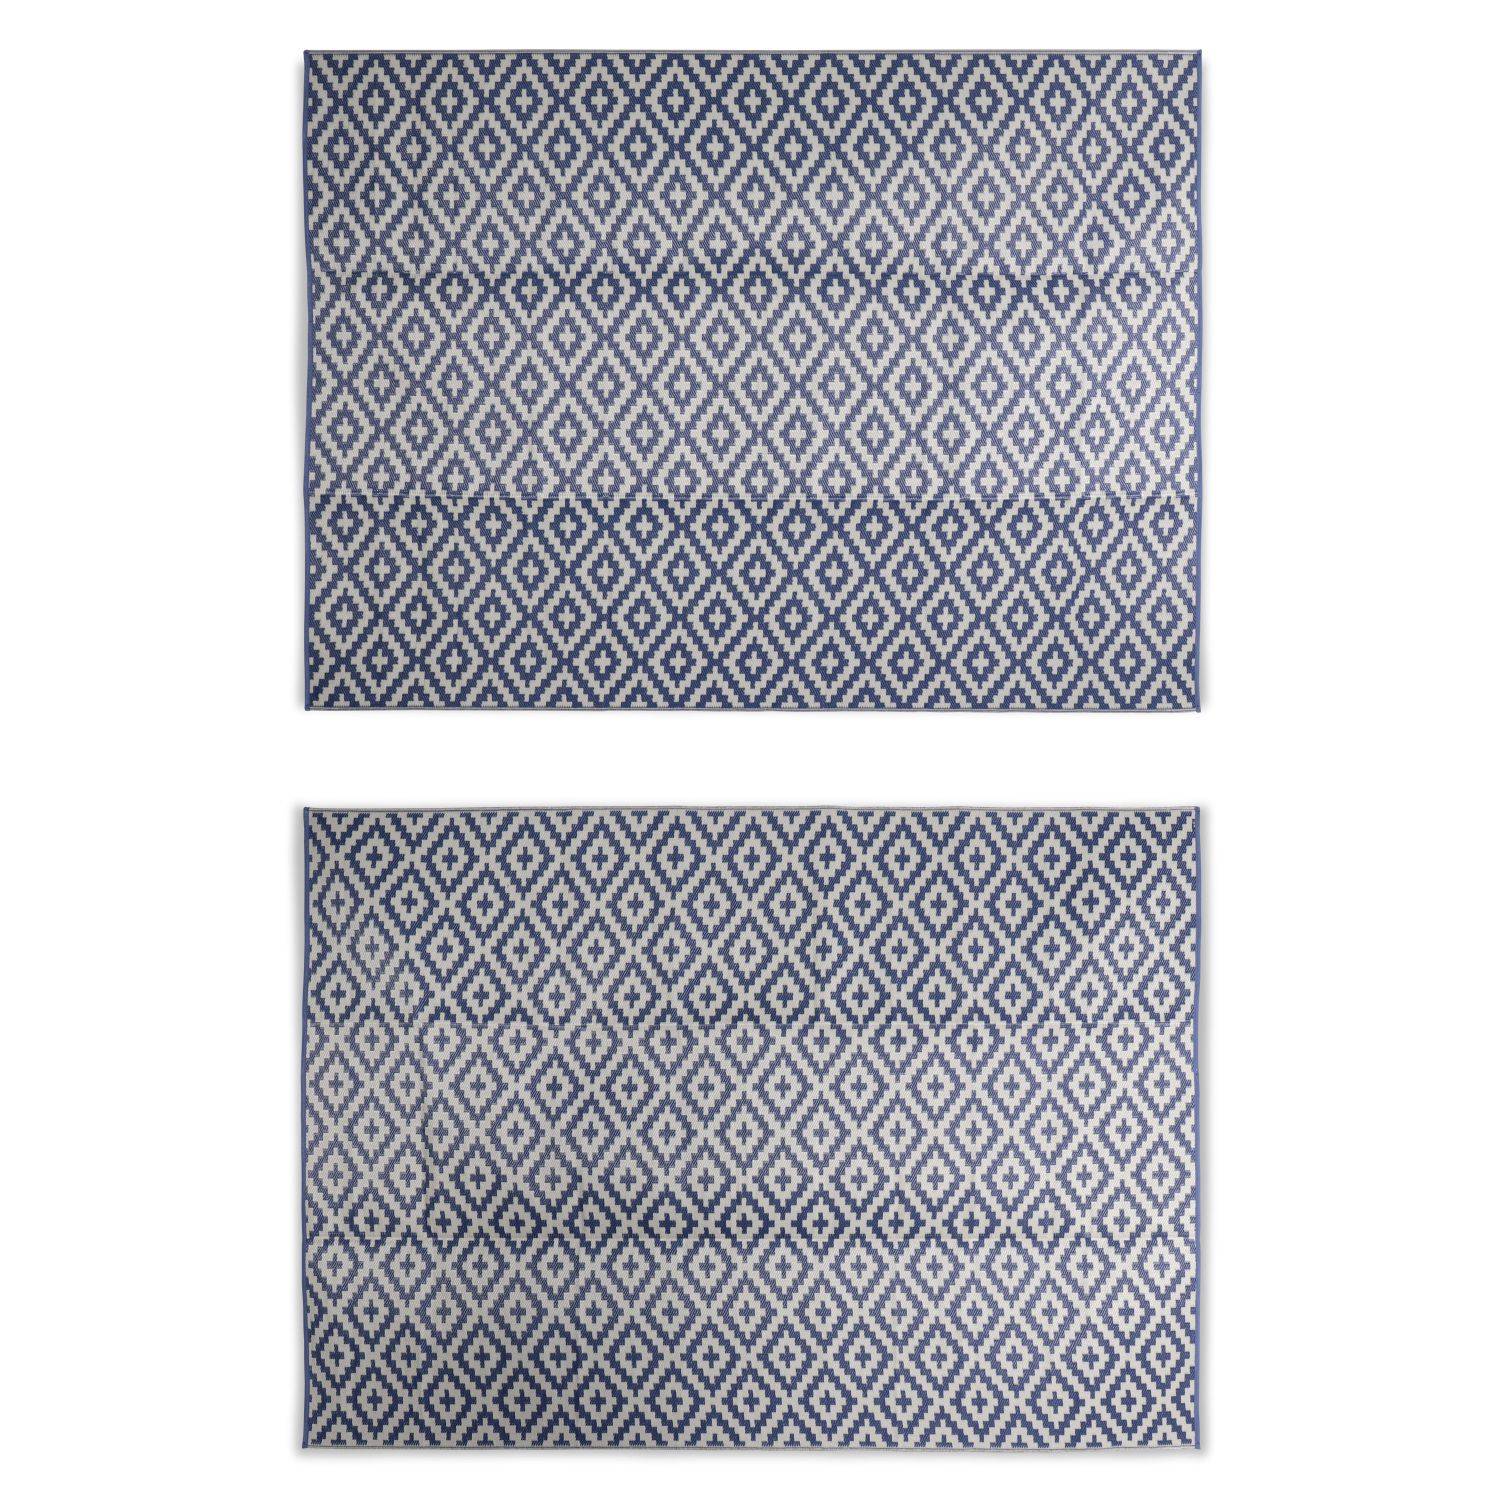 Alfombra de exterior 270x360cm STOCKHOLM - Rectangular, patrón de diamantes azul / beige, jacquard, reversible, interior / exterior. Photo2